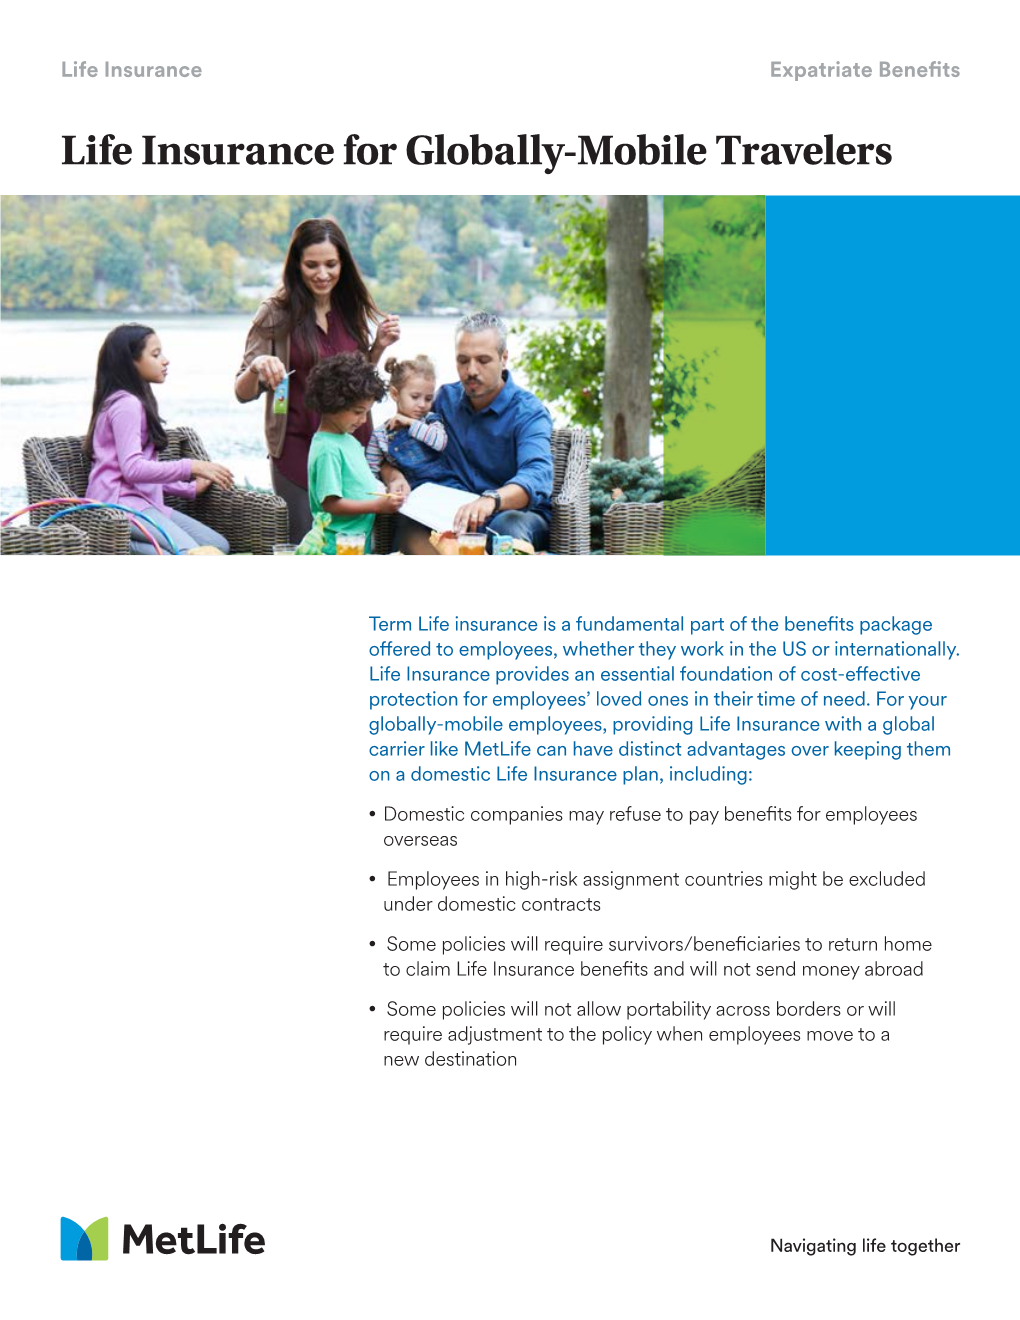 Life Insurance for Globally-Mobile Travelers